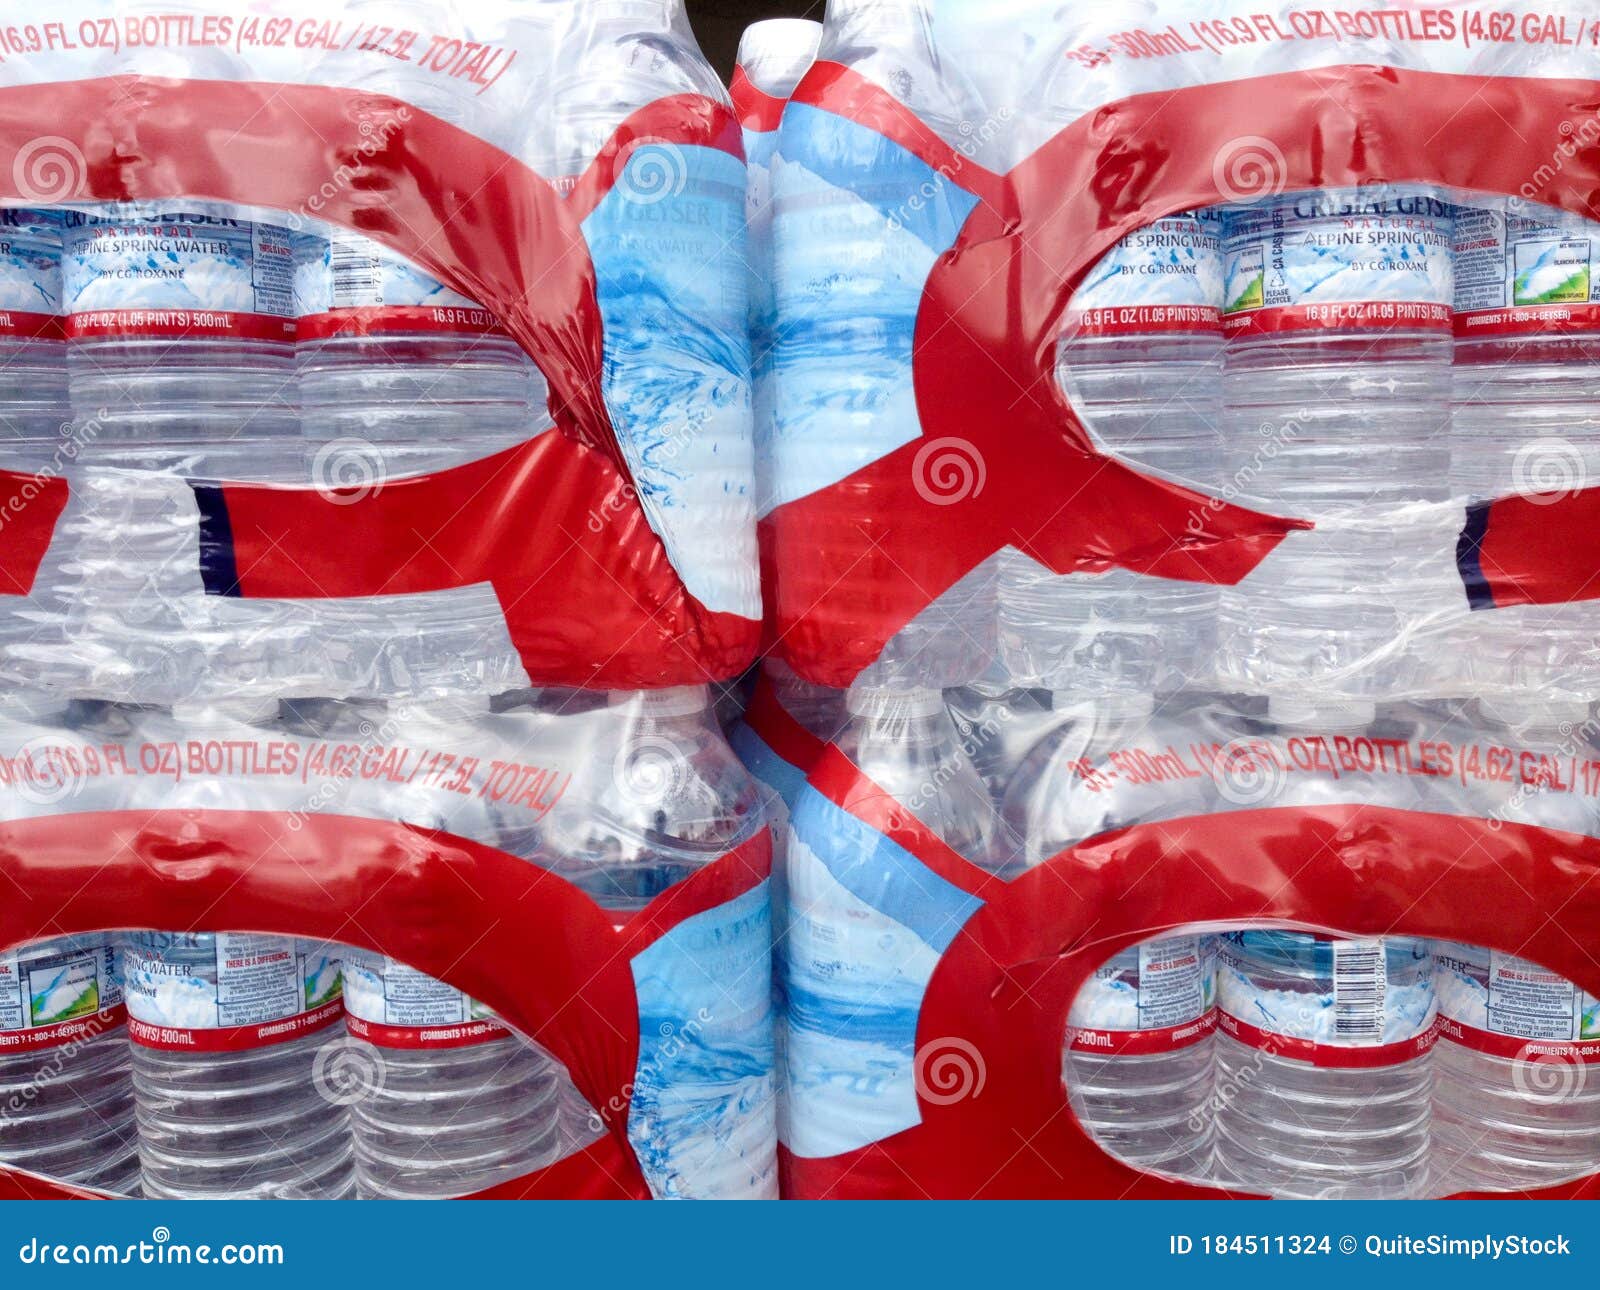 Botellas Agua Plastico 500ml – Supermayorista